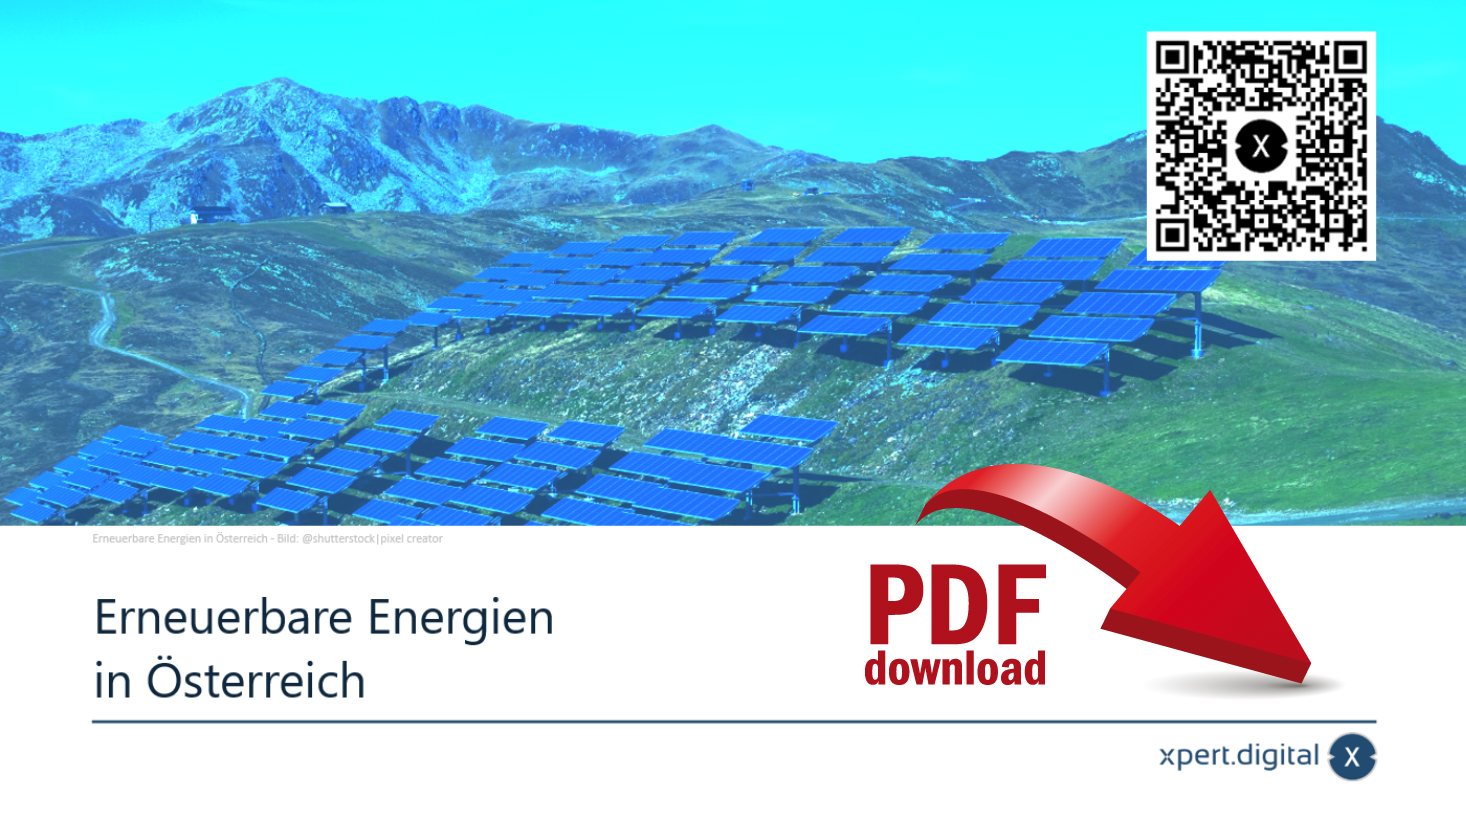 Protected: Renewable energies in Austria